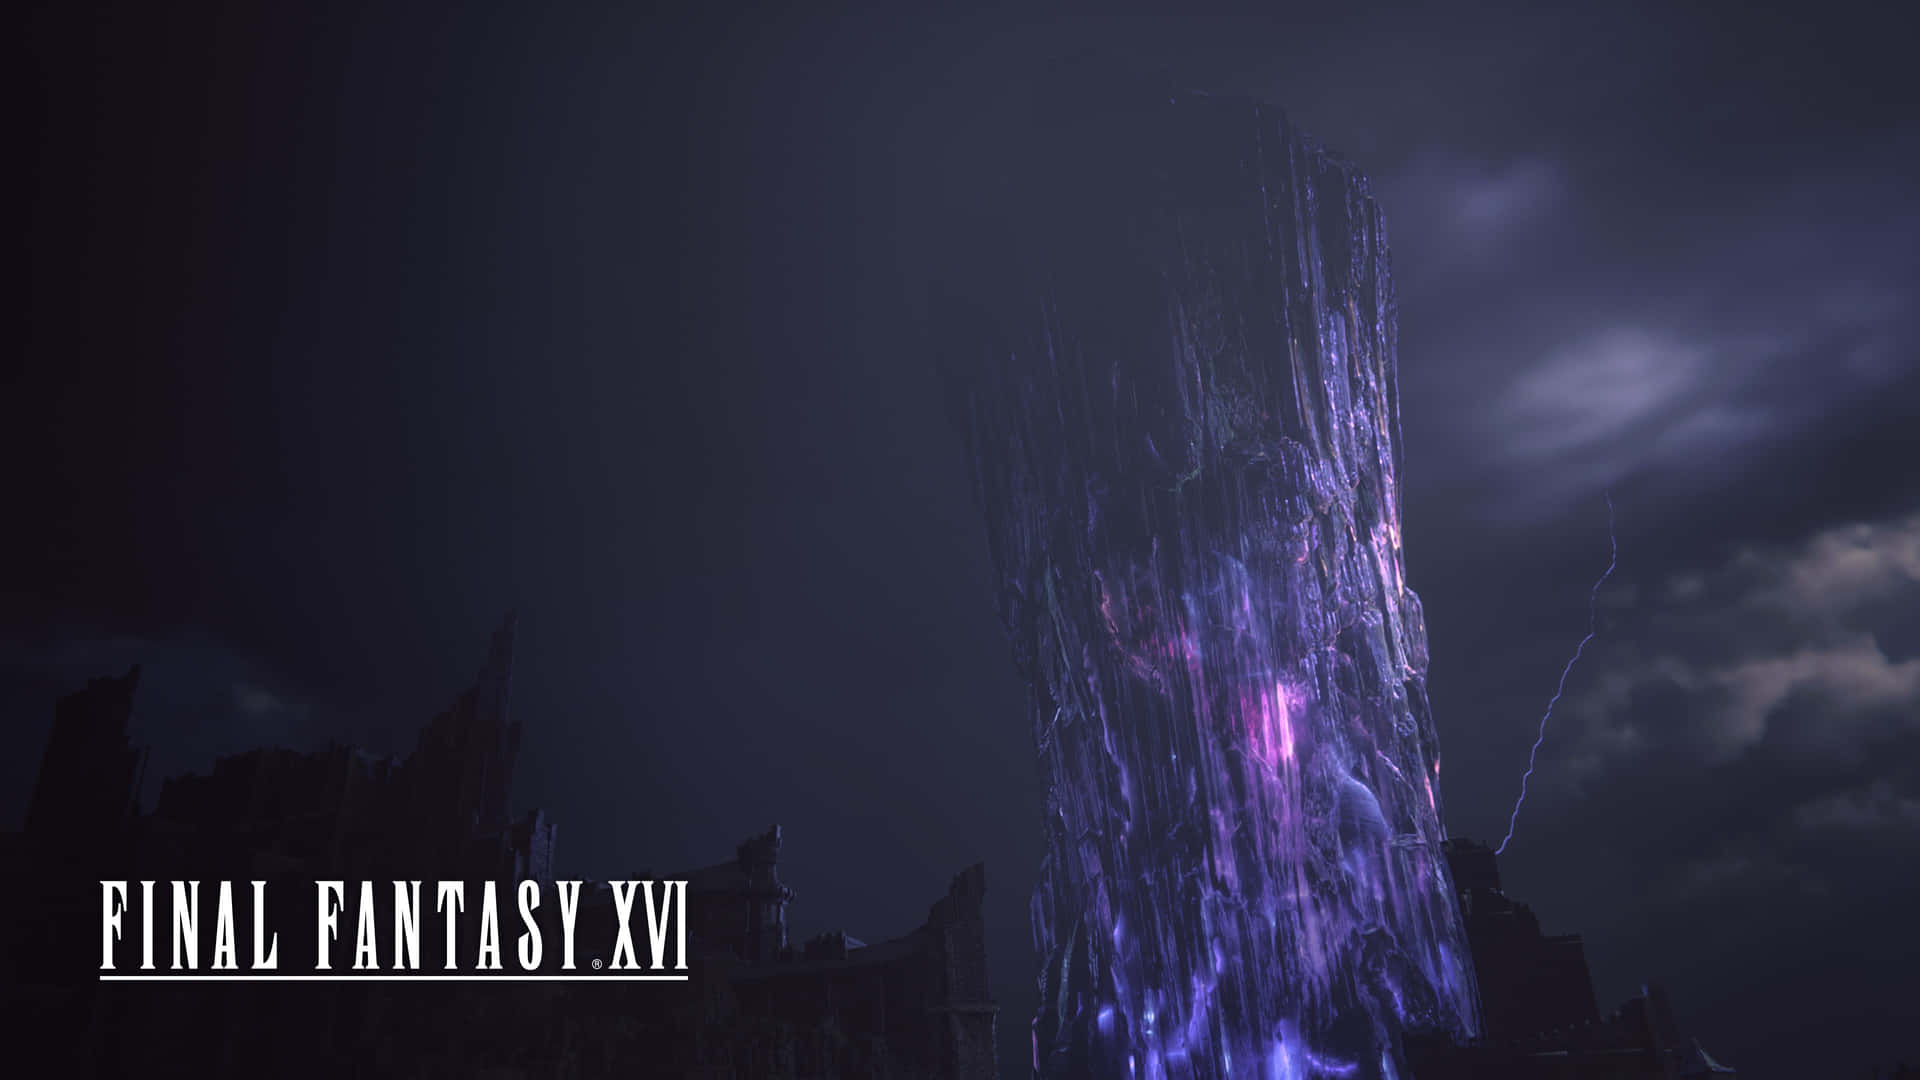 Final Fantasy X V I Mysterious Crystal Tower Wallpaper